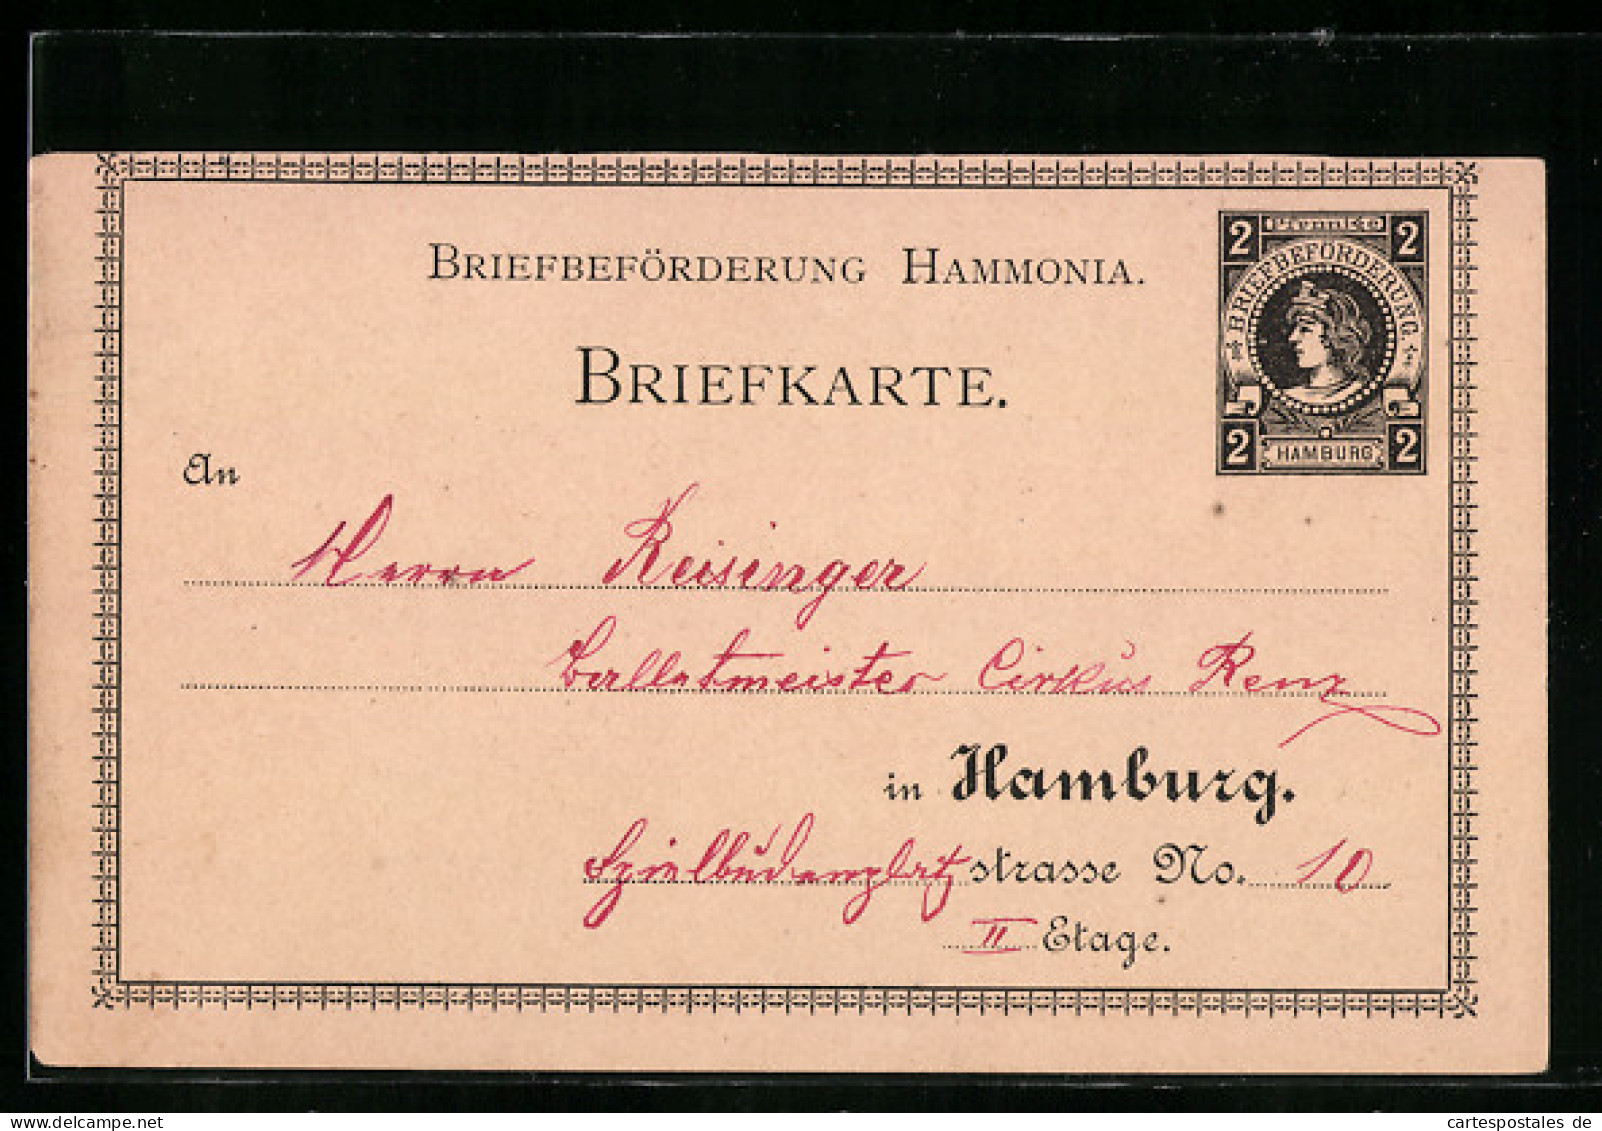 AK Briefkarte, Briefbeförderung Hammonia Hamburg, Ganzsache  - Timbres (représentations)